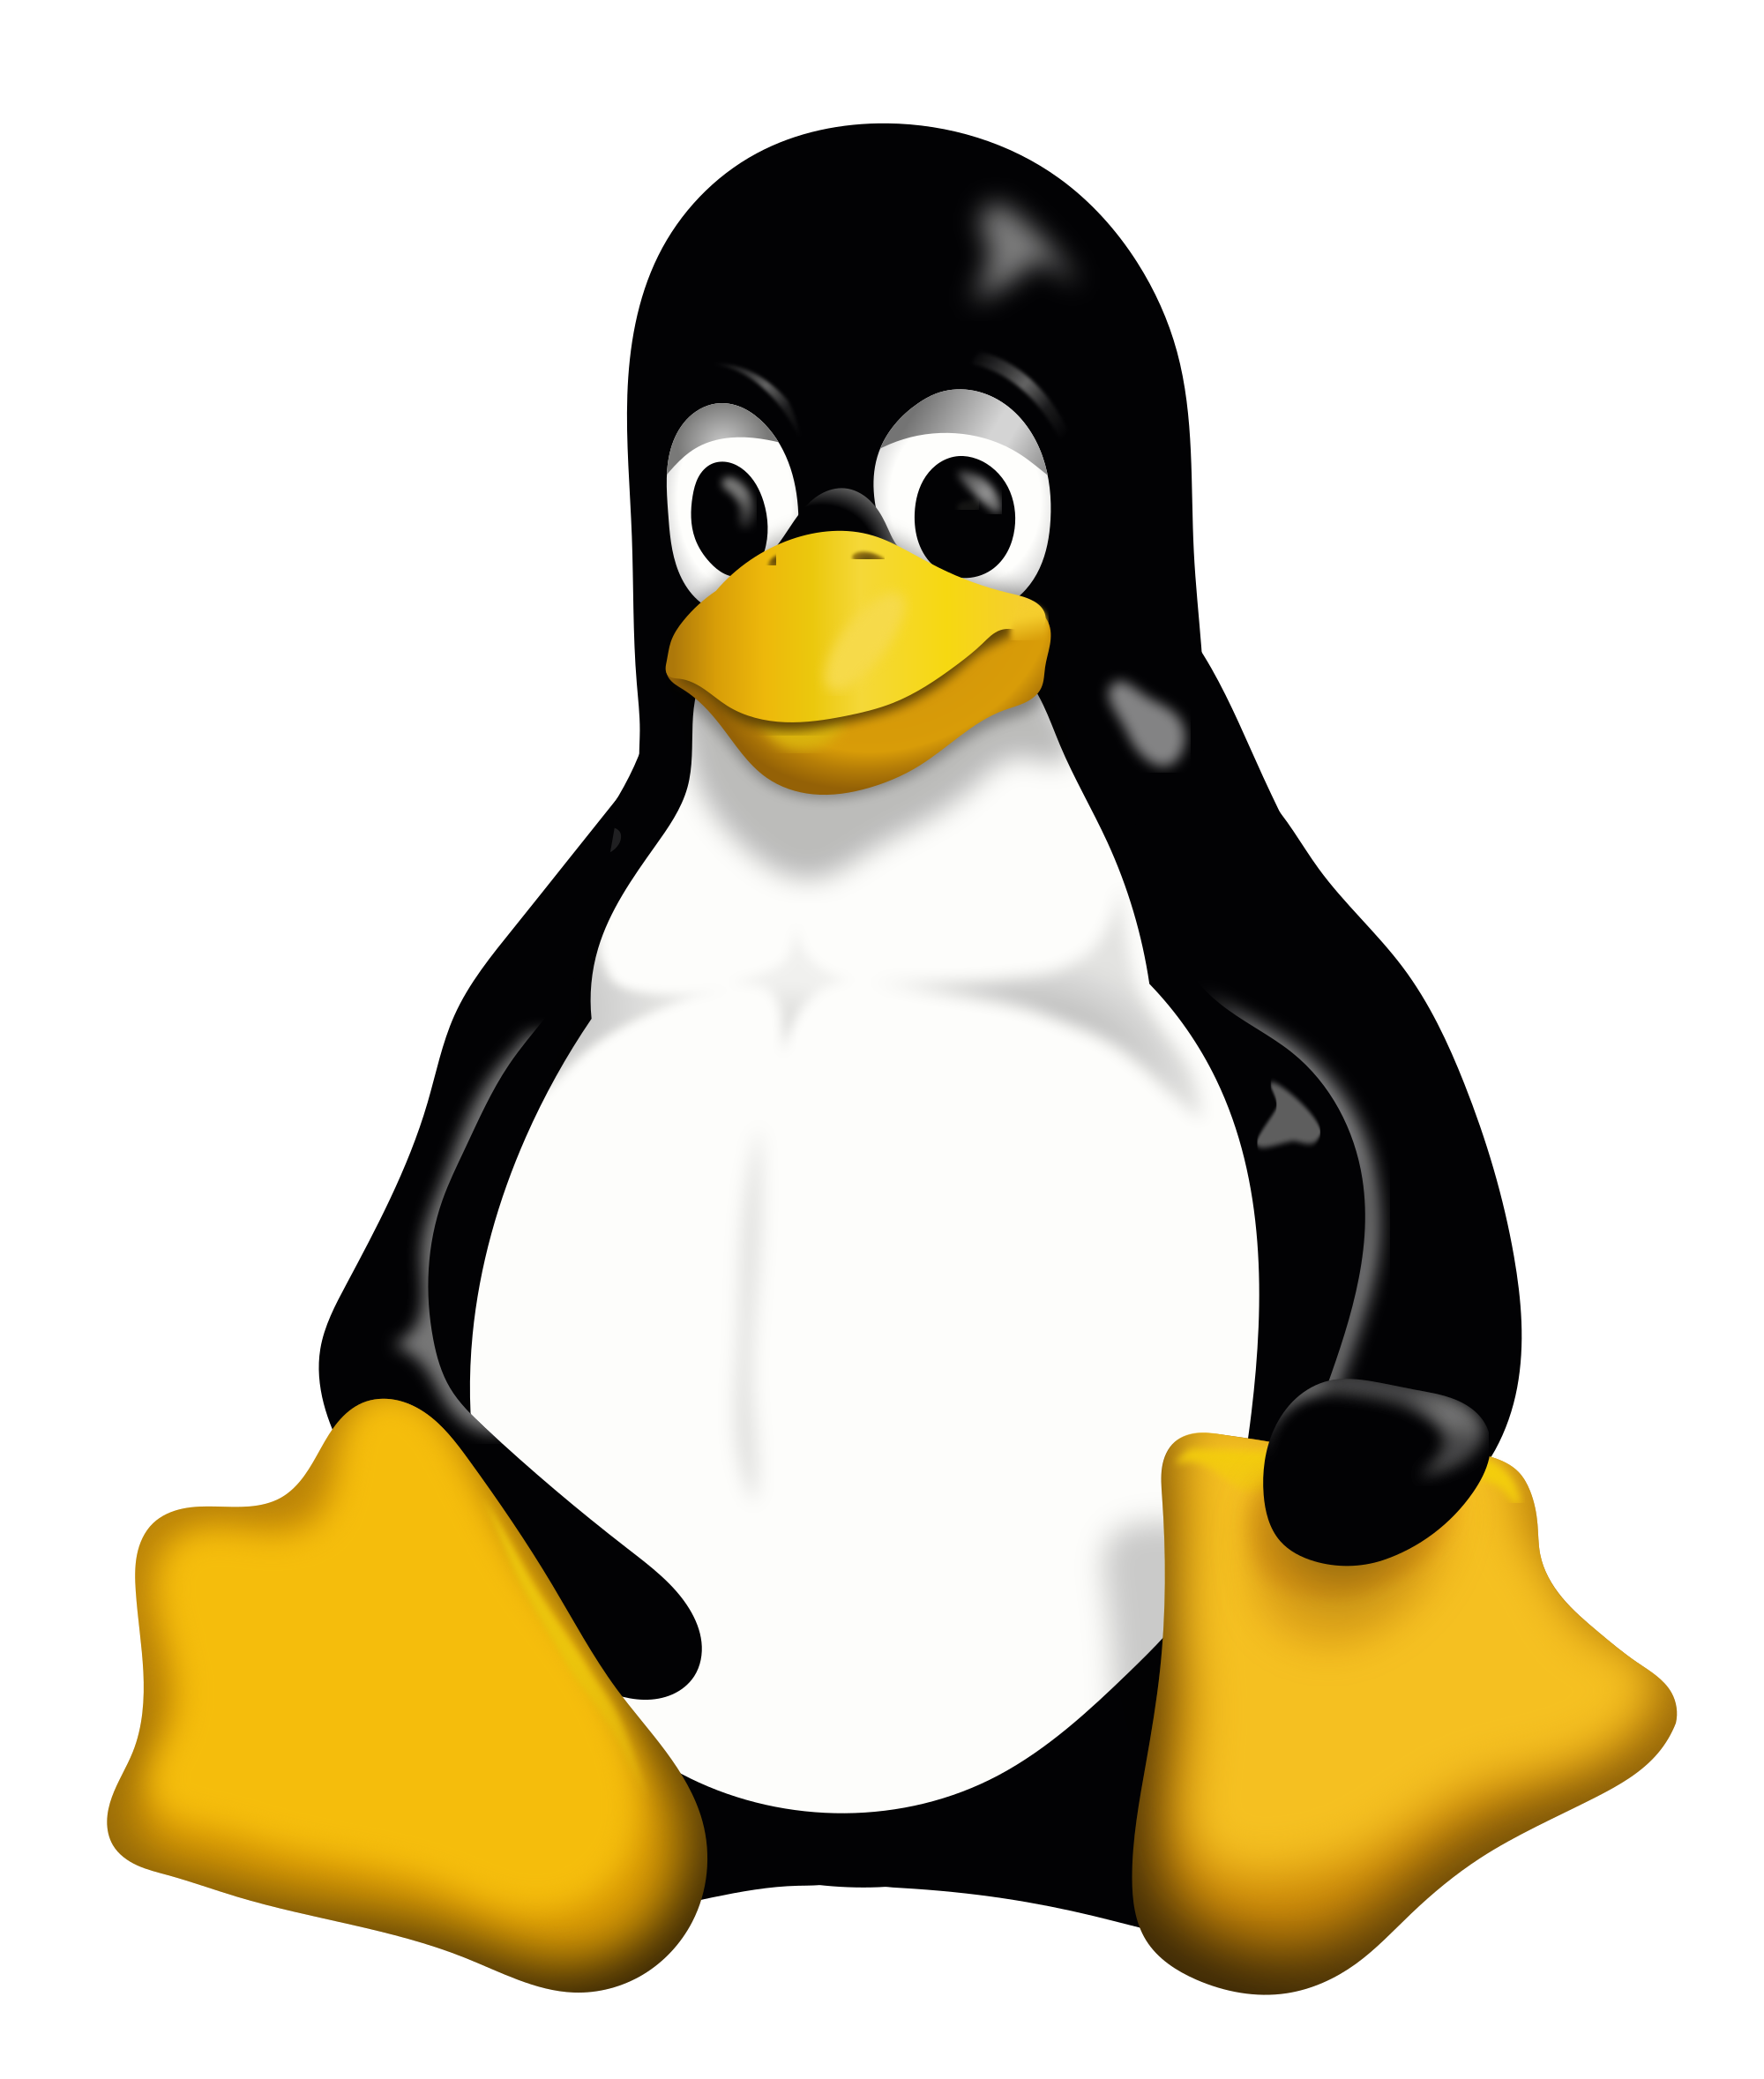 Linux Mint Xfce voor op Roadkill Computers